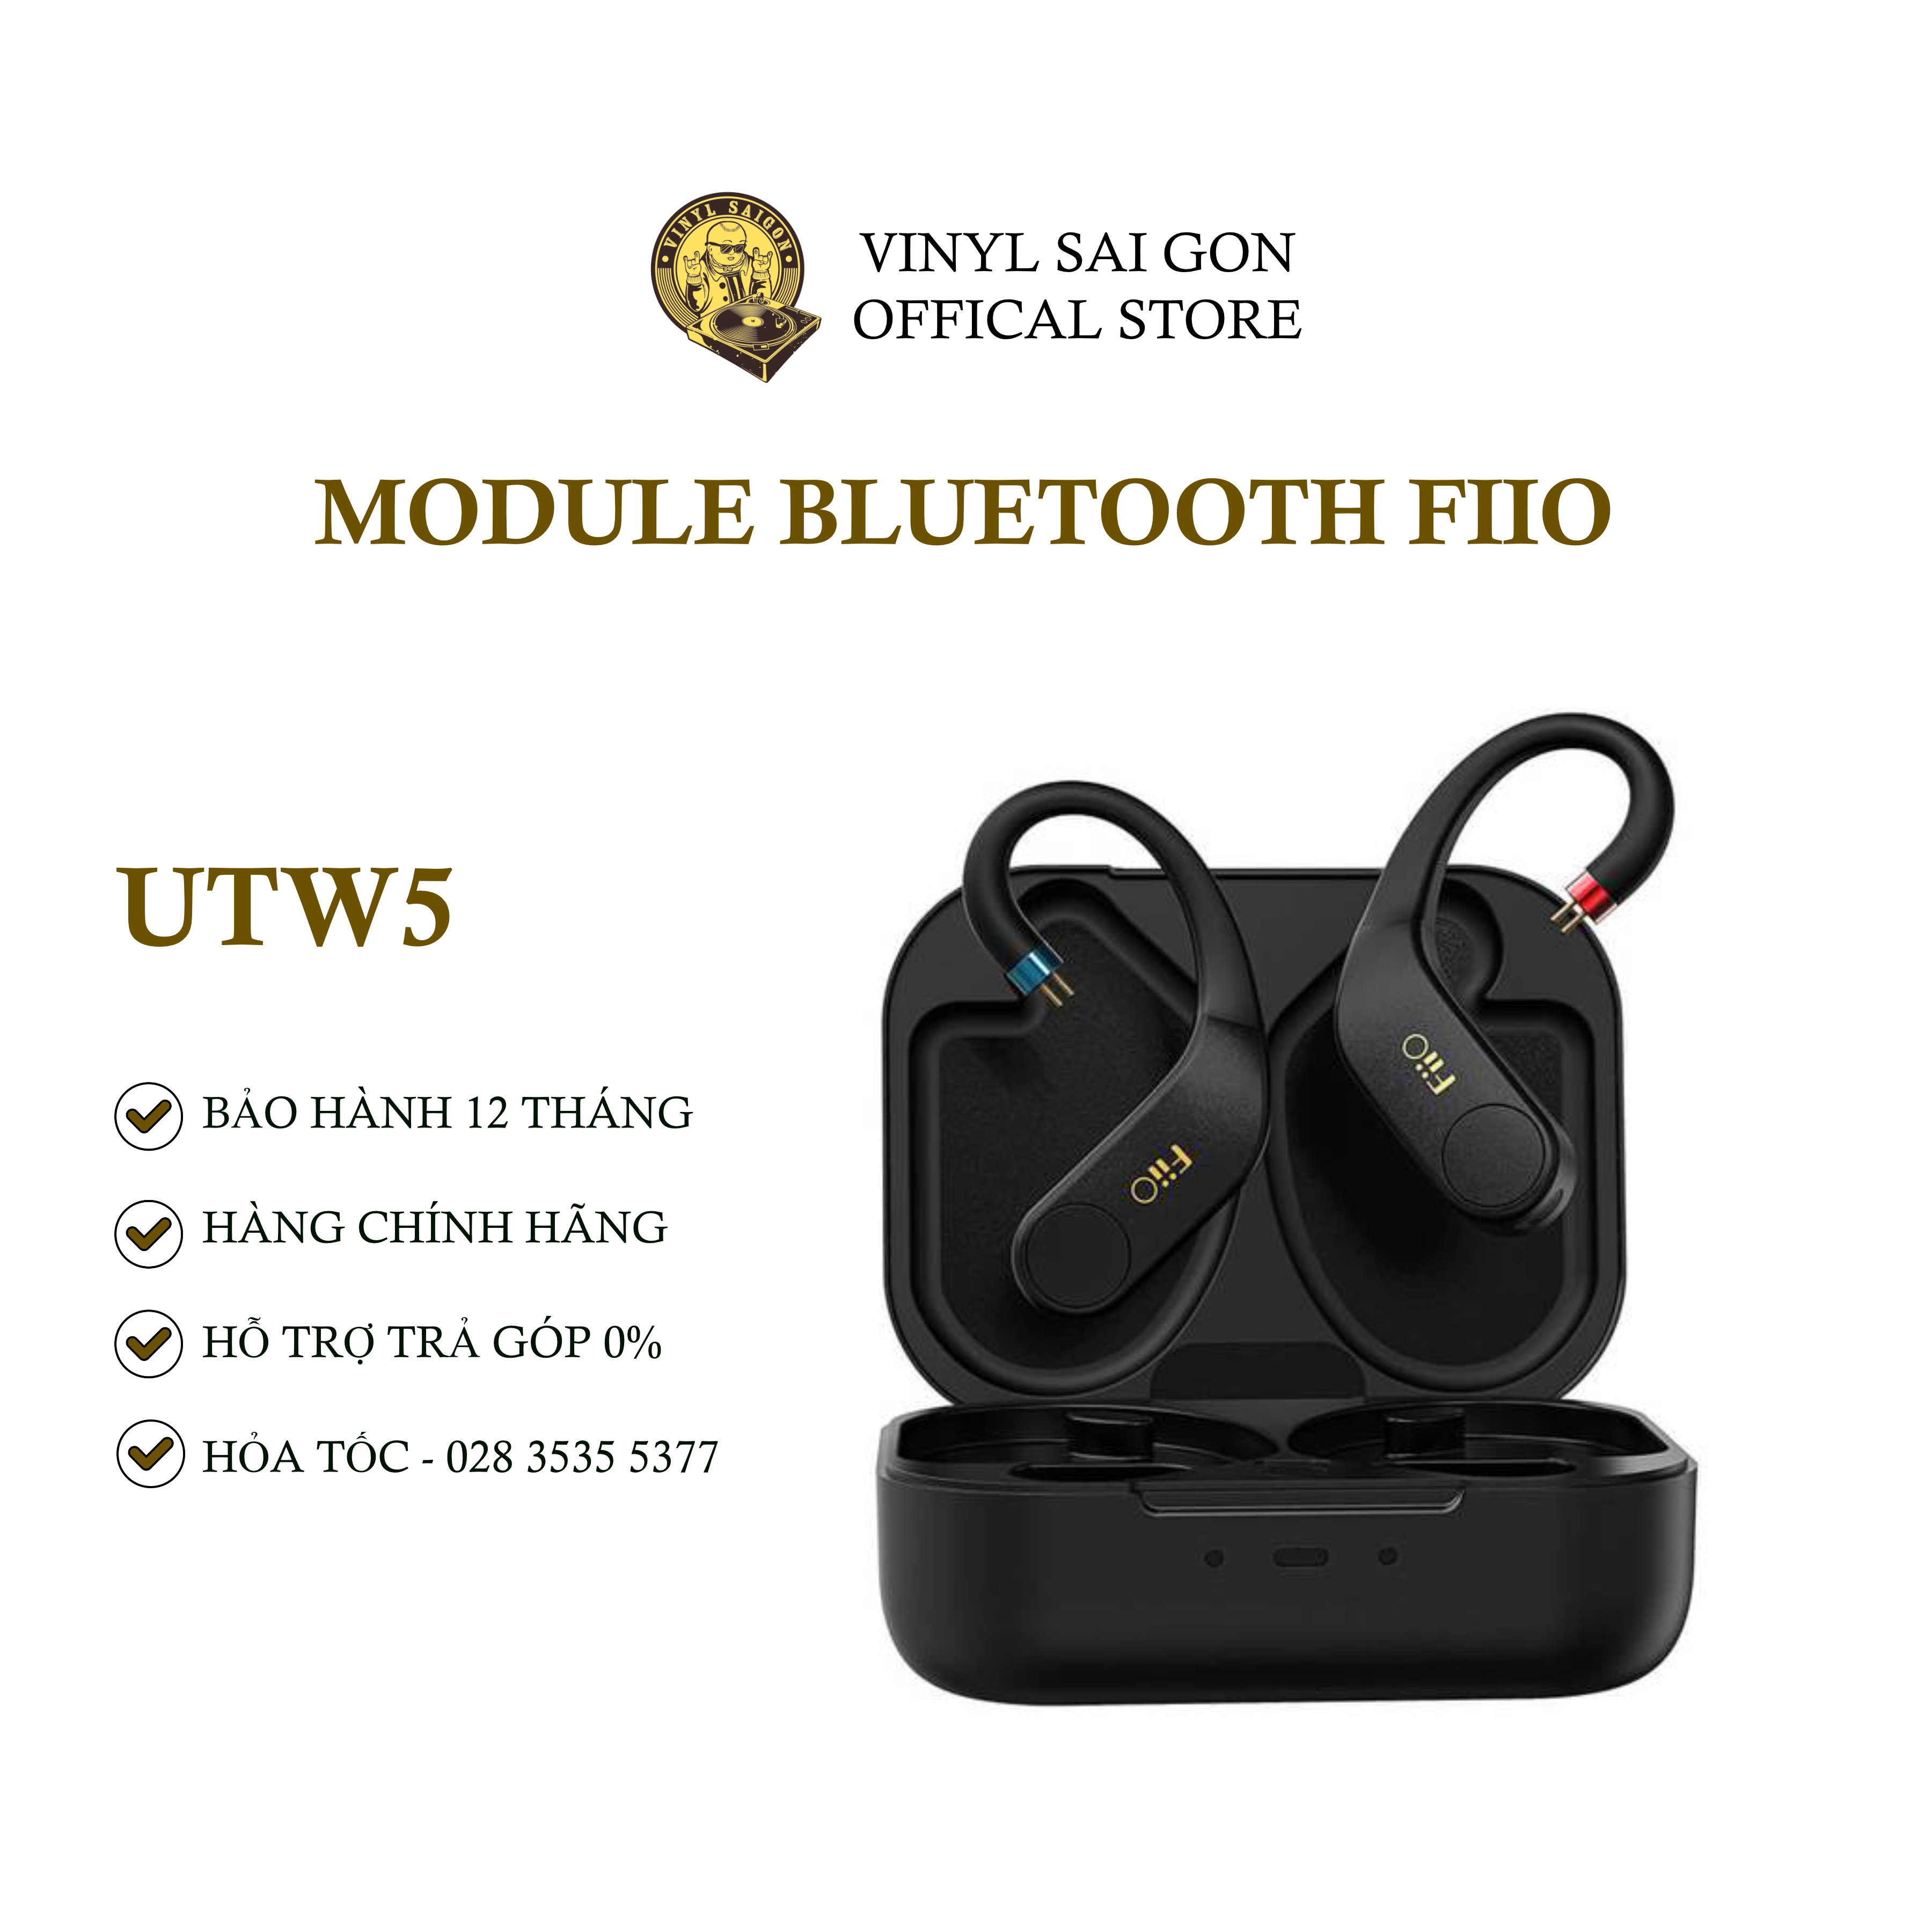 Thiết Bị Module Bluetooth FiiO UTWS5 Dành Cho Tai Nghe FiiO - Hàng Nhập Khẩu